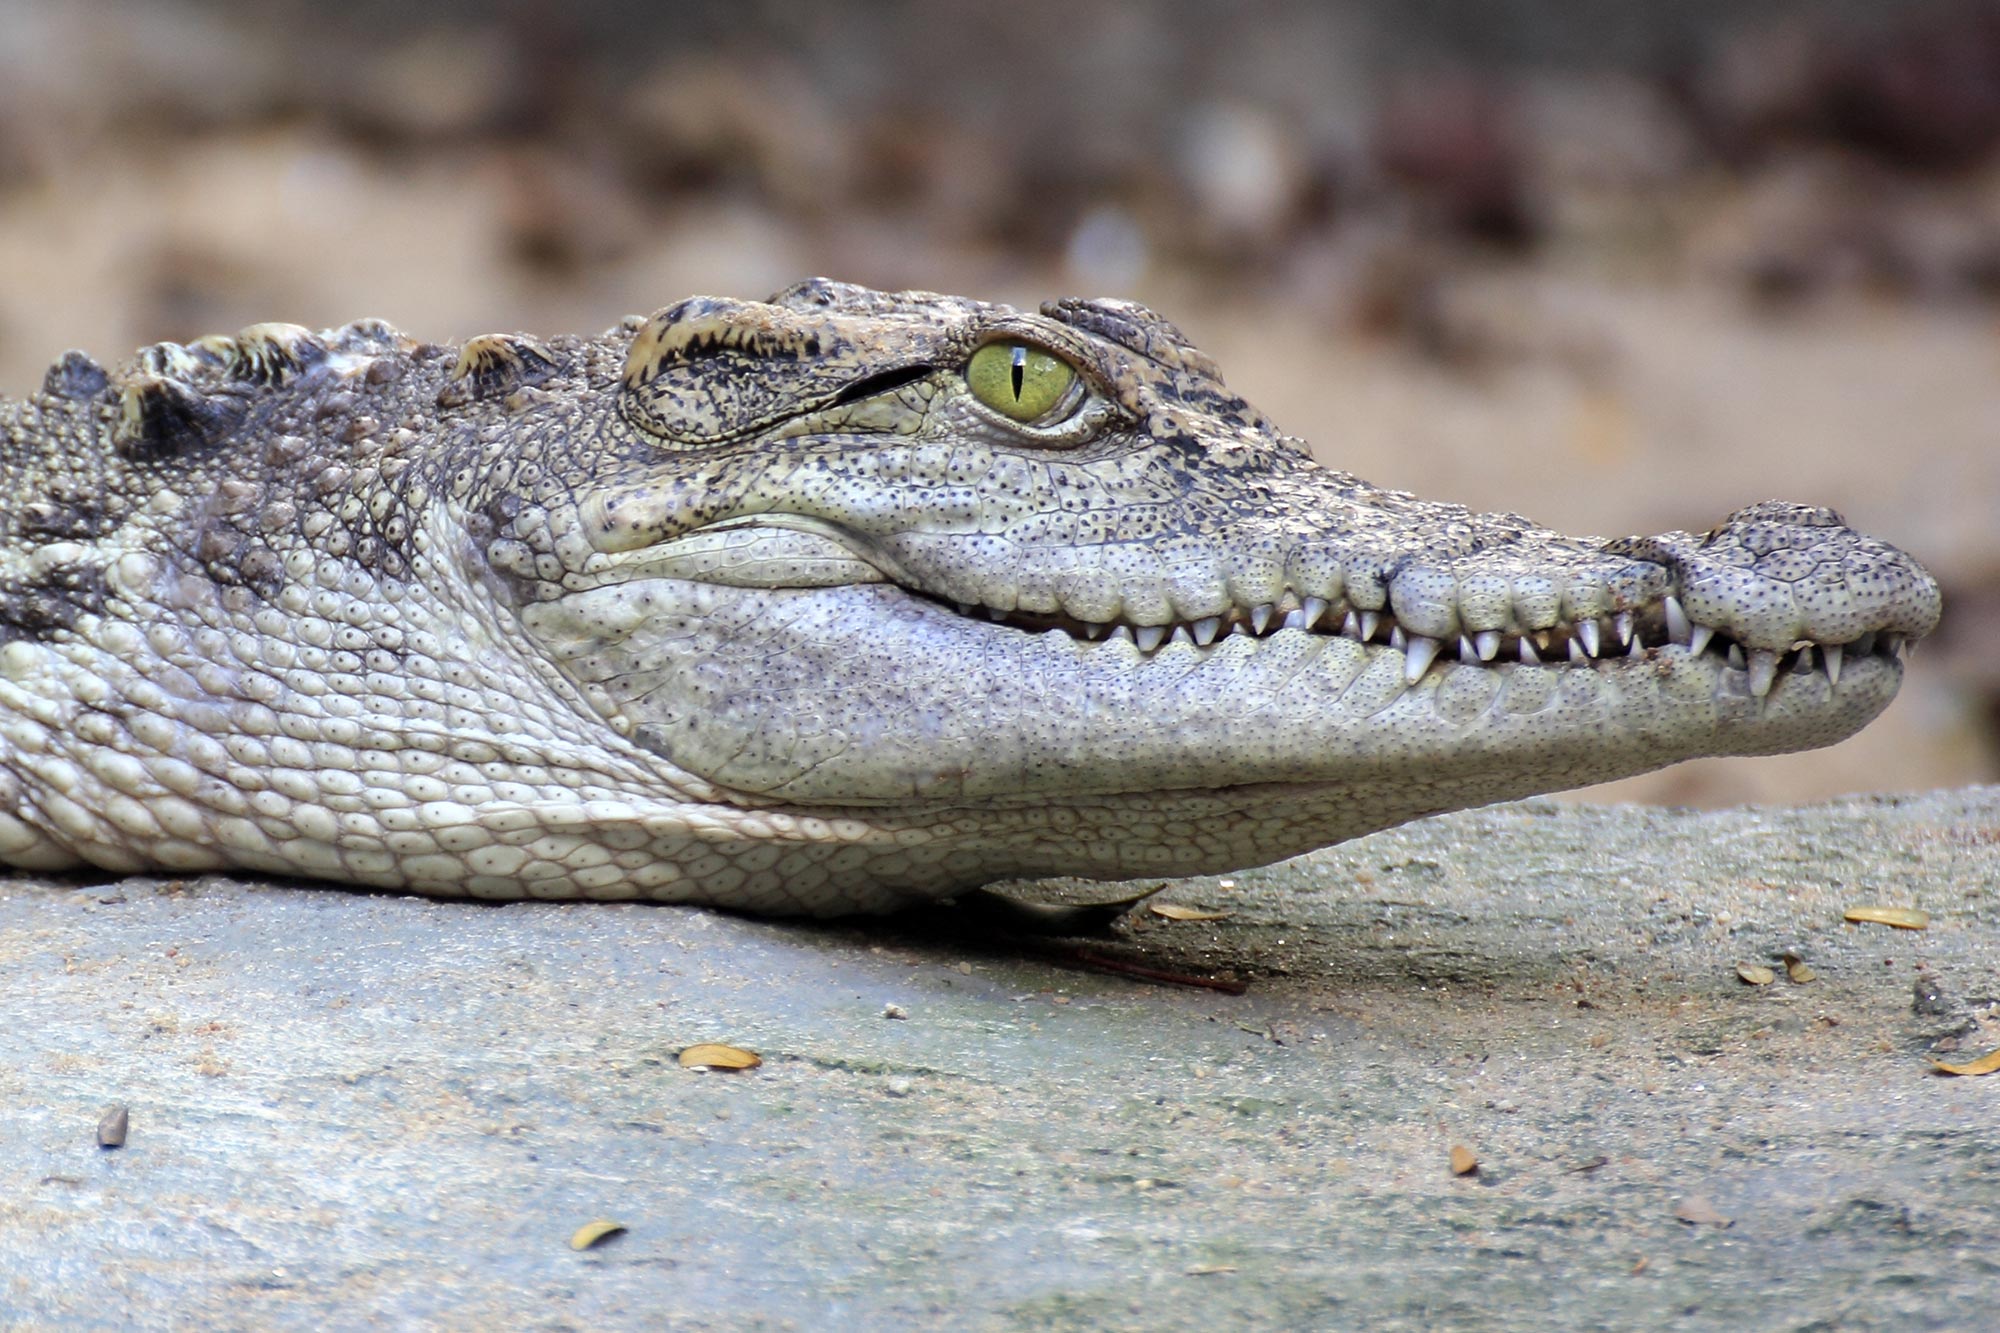 Image Crocodile